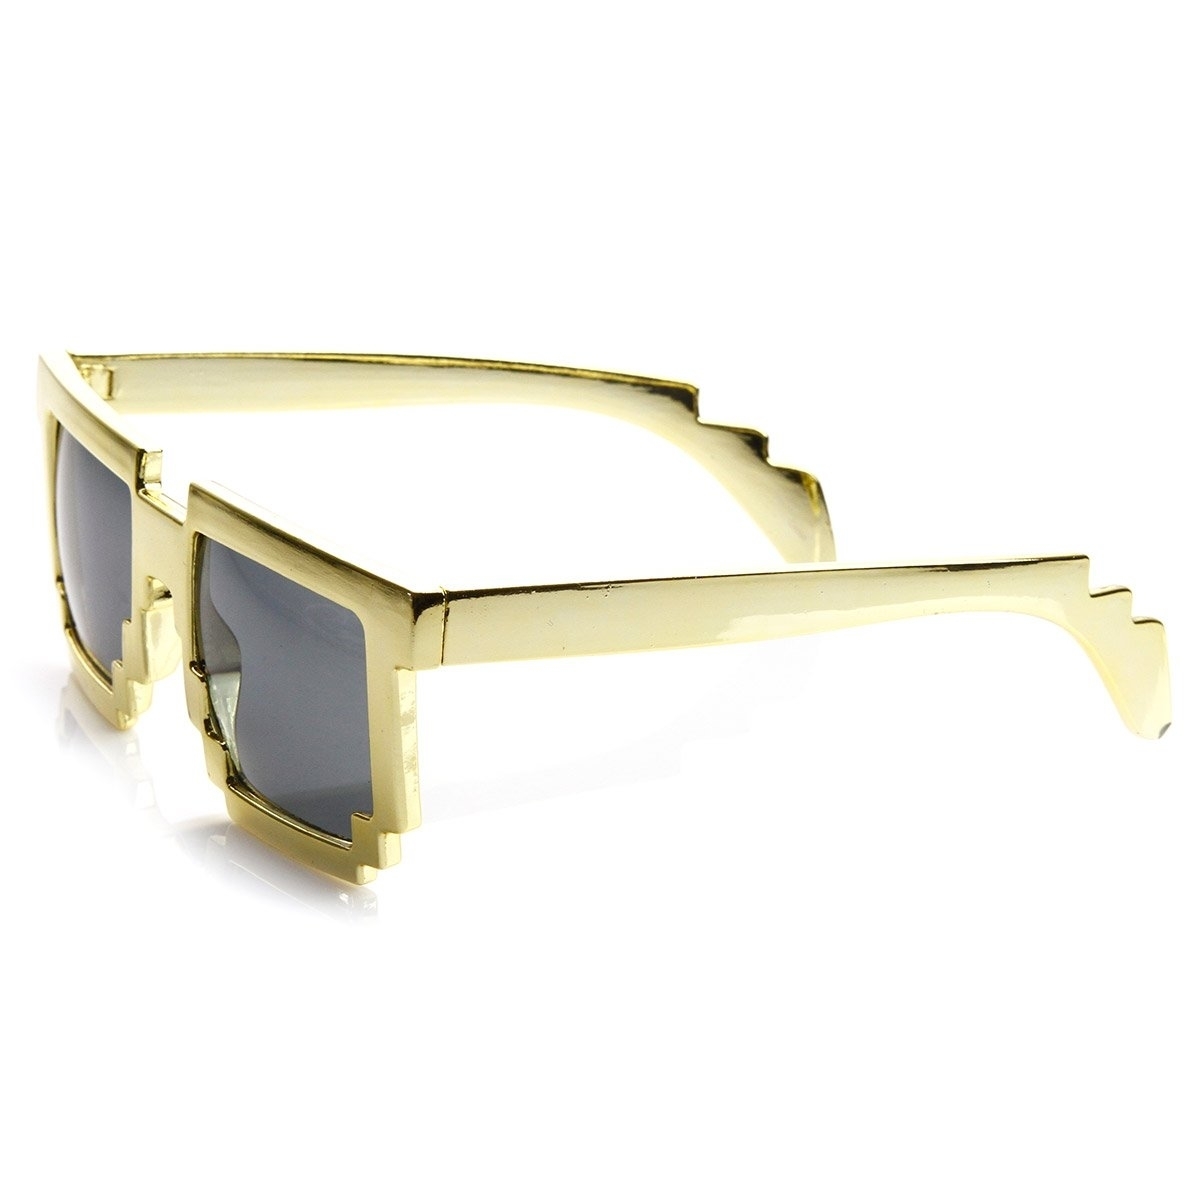 Shiny Foil Color Pixel 8-Bit CPU Gamer Geek Novelty Sunglasses - Silver